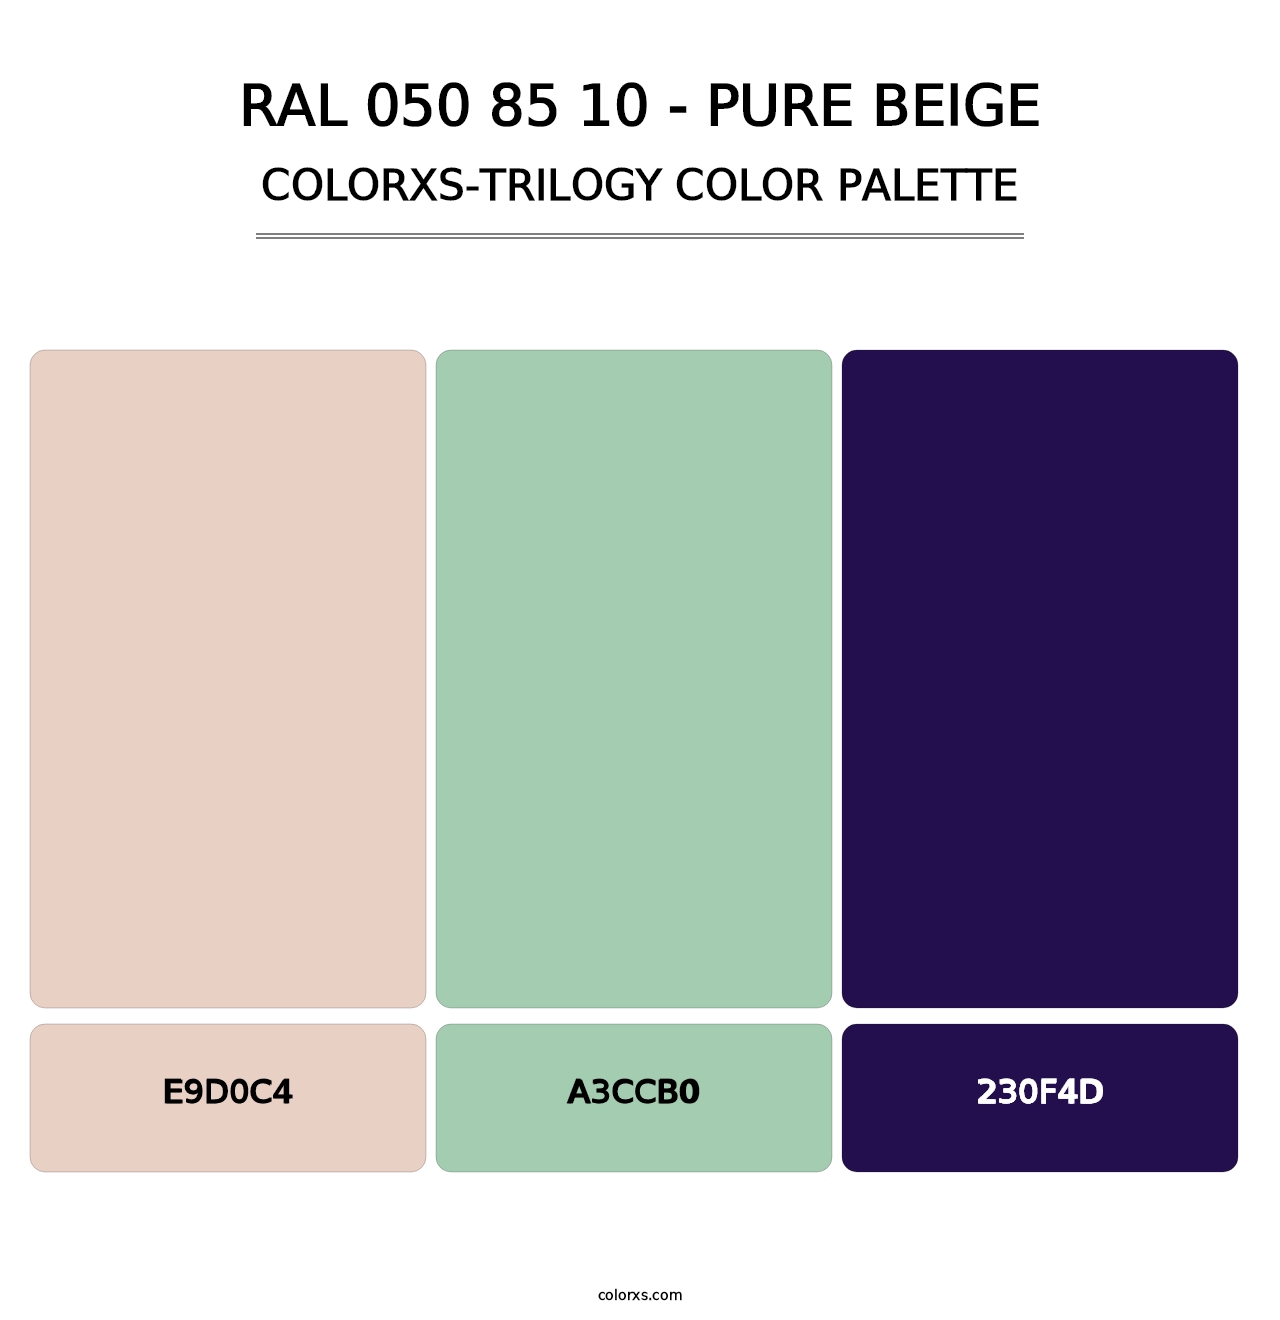 RAL 050 85 10 - Pure Beige - Colorxs Trilogy Palette